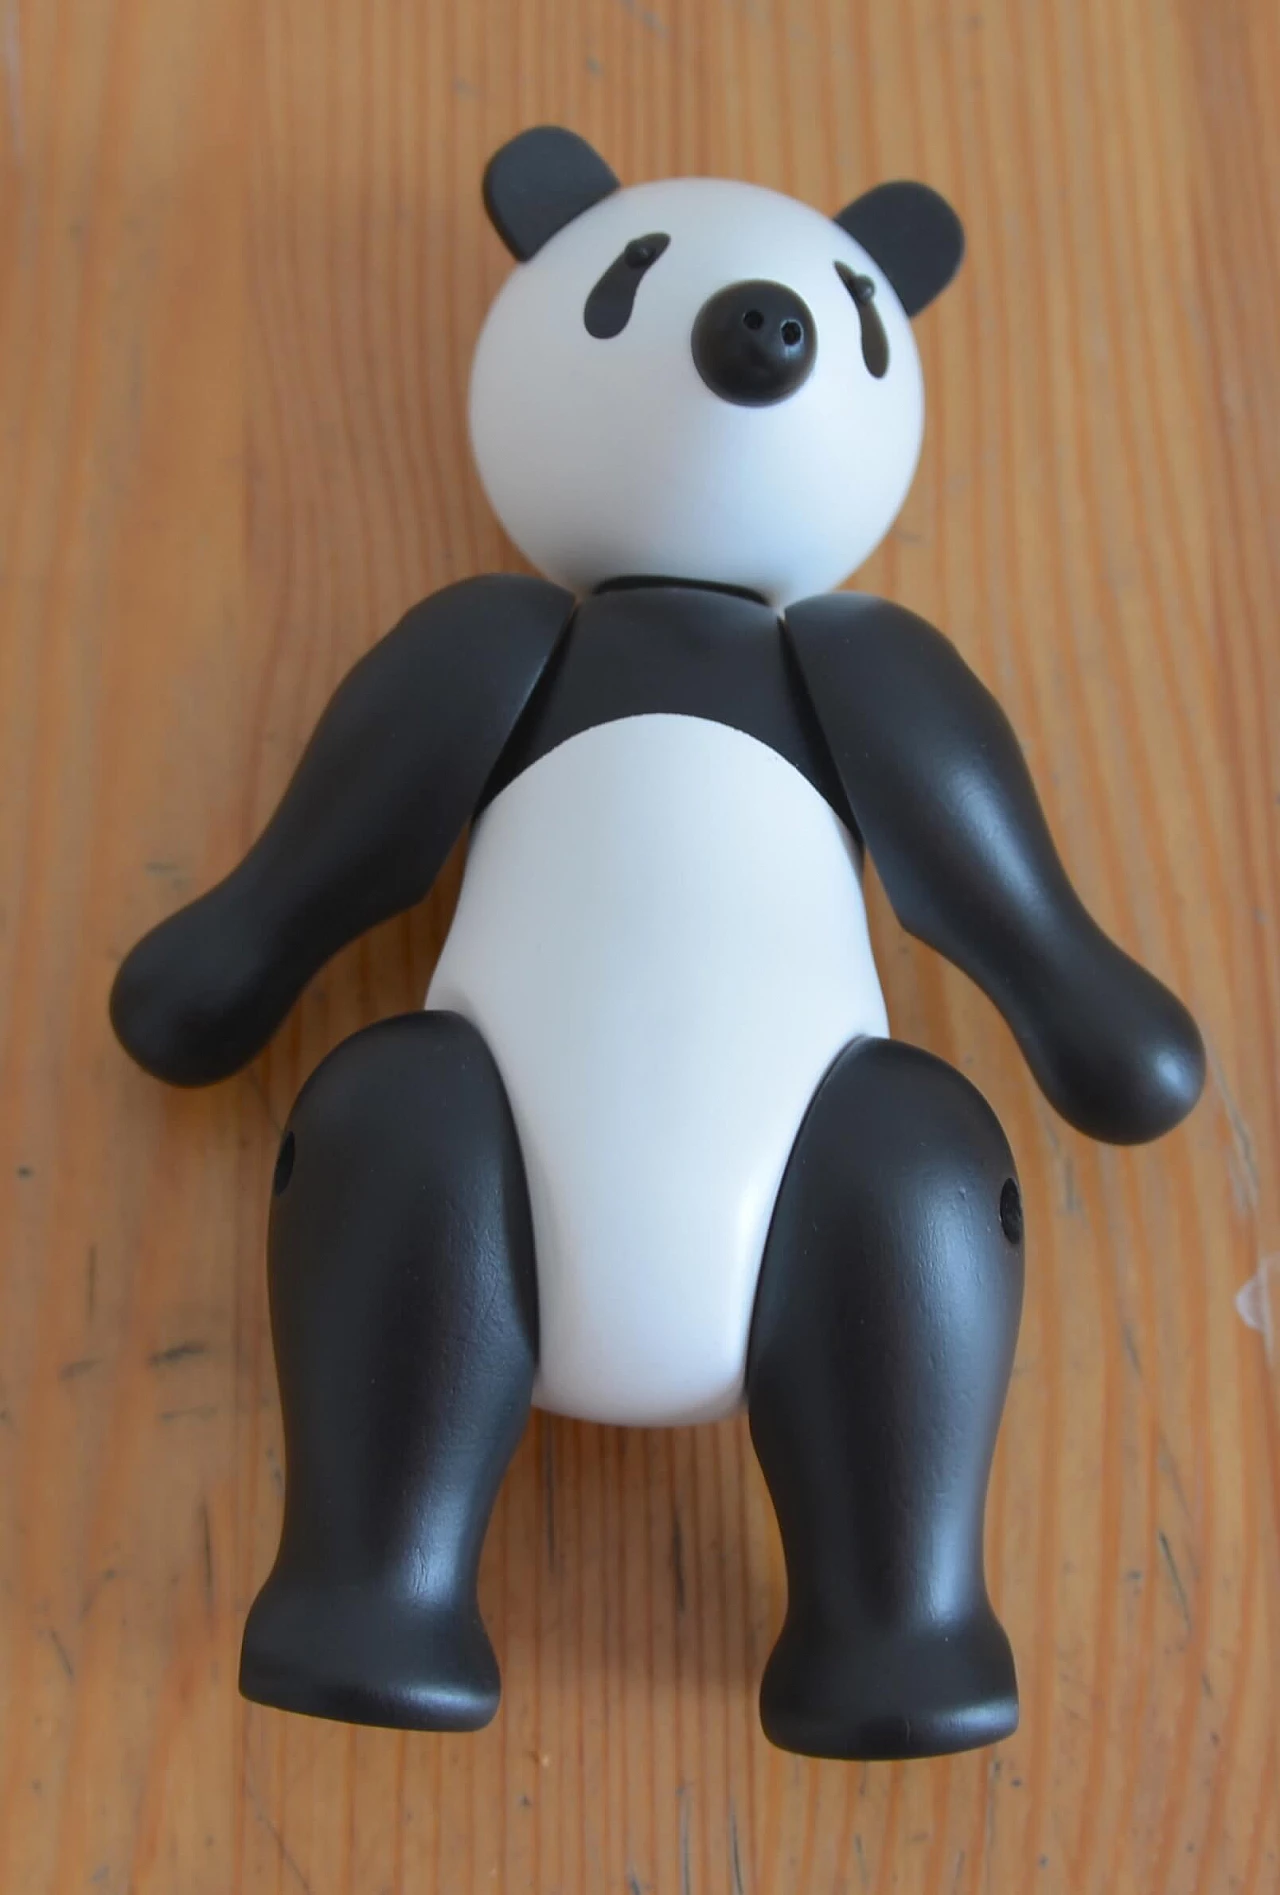 Wood Panda statuette by Kay Bojesen 4